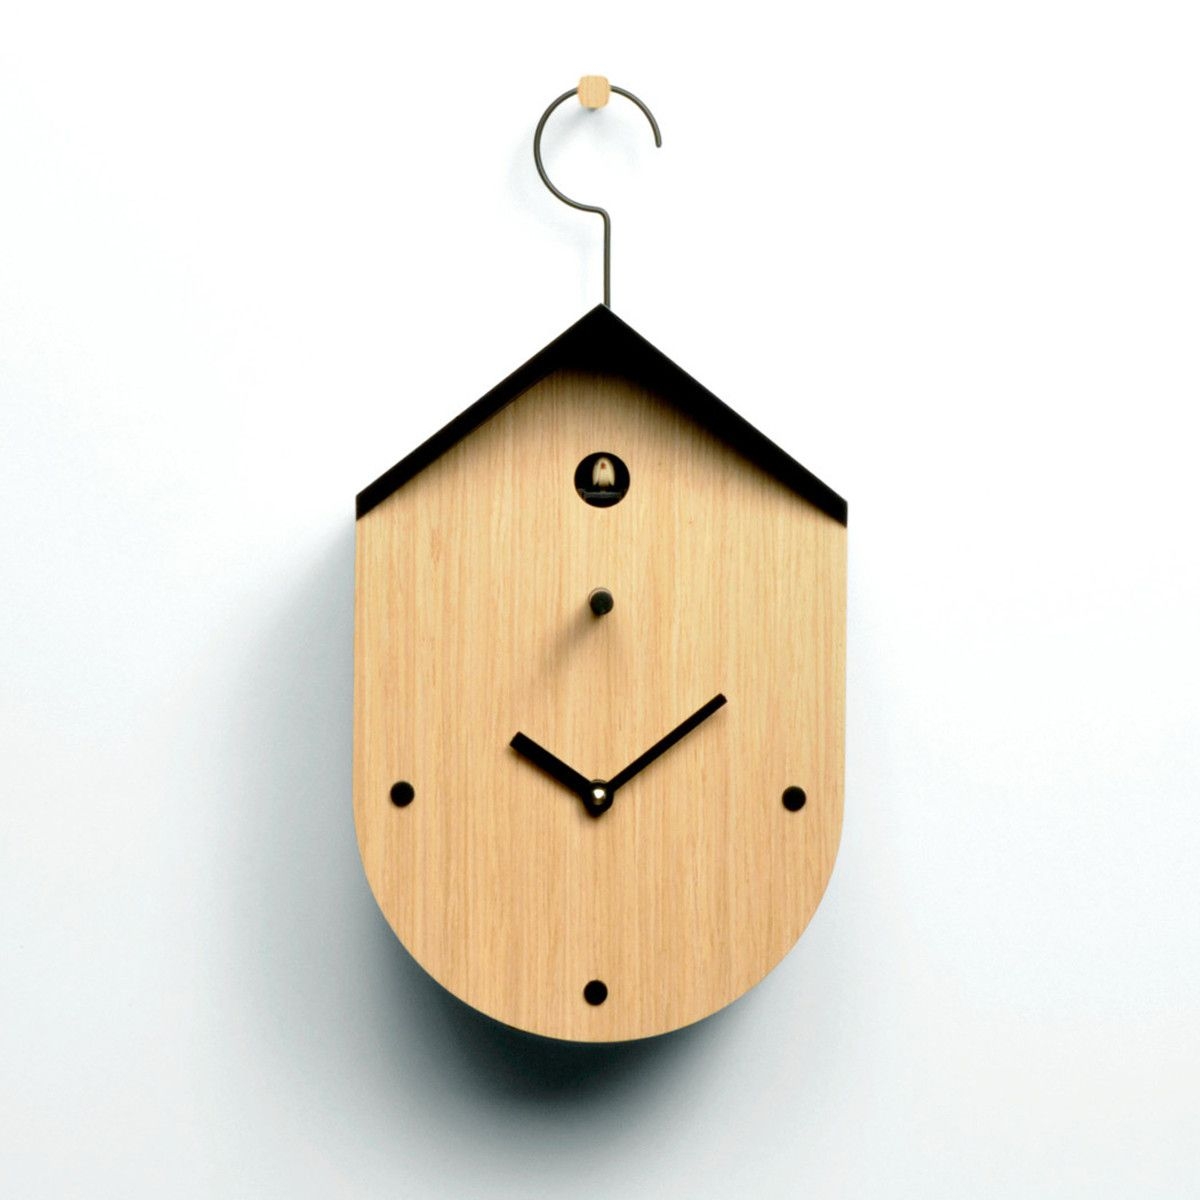 Freetime cuckoo clock a new modern cuckoo clock design again